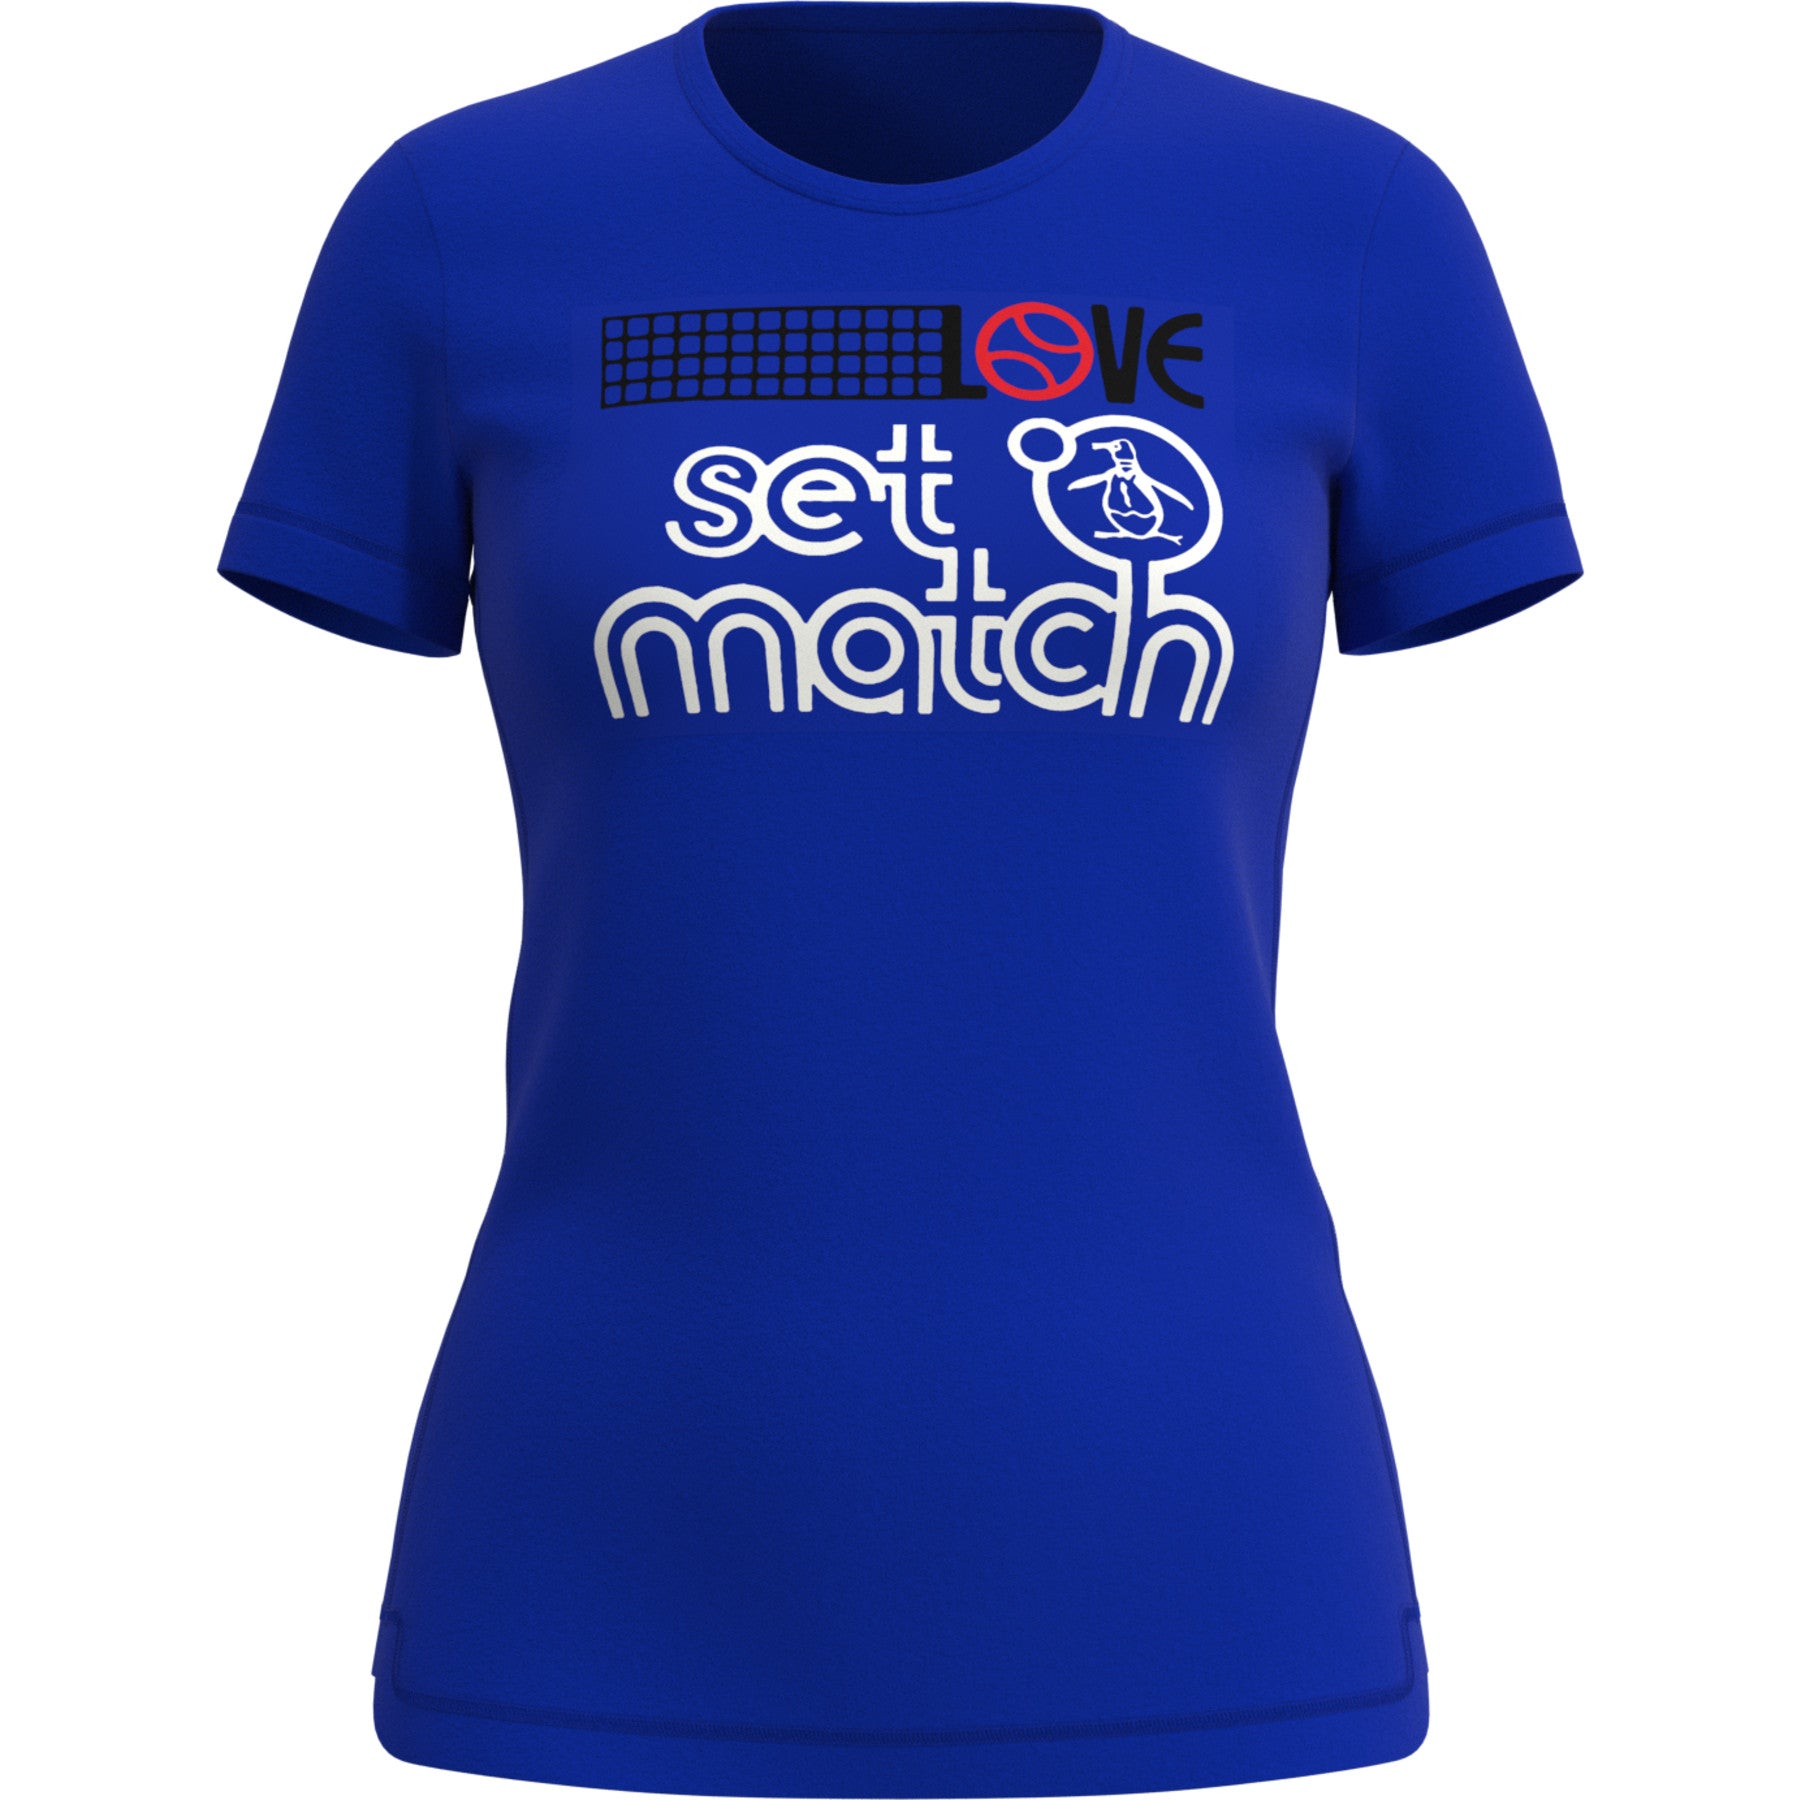 View Womens Tennis Love Set Match Graphic Tennis TShirt In Blue Tattoo information